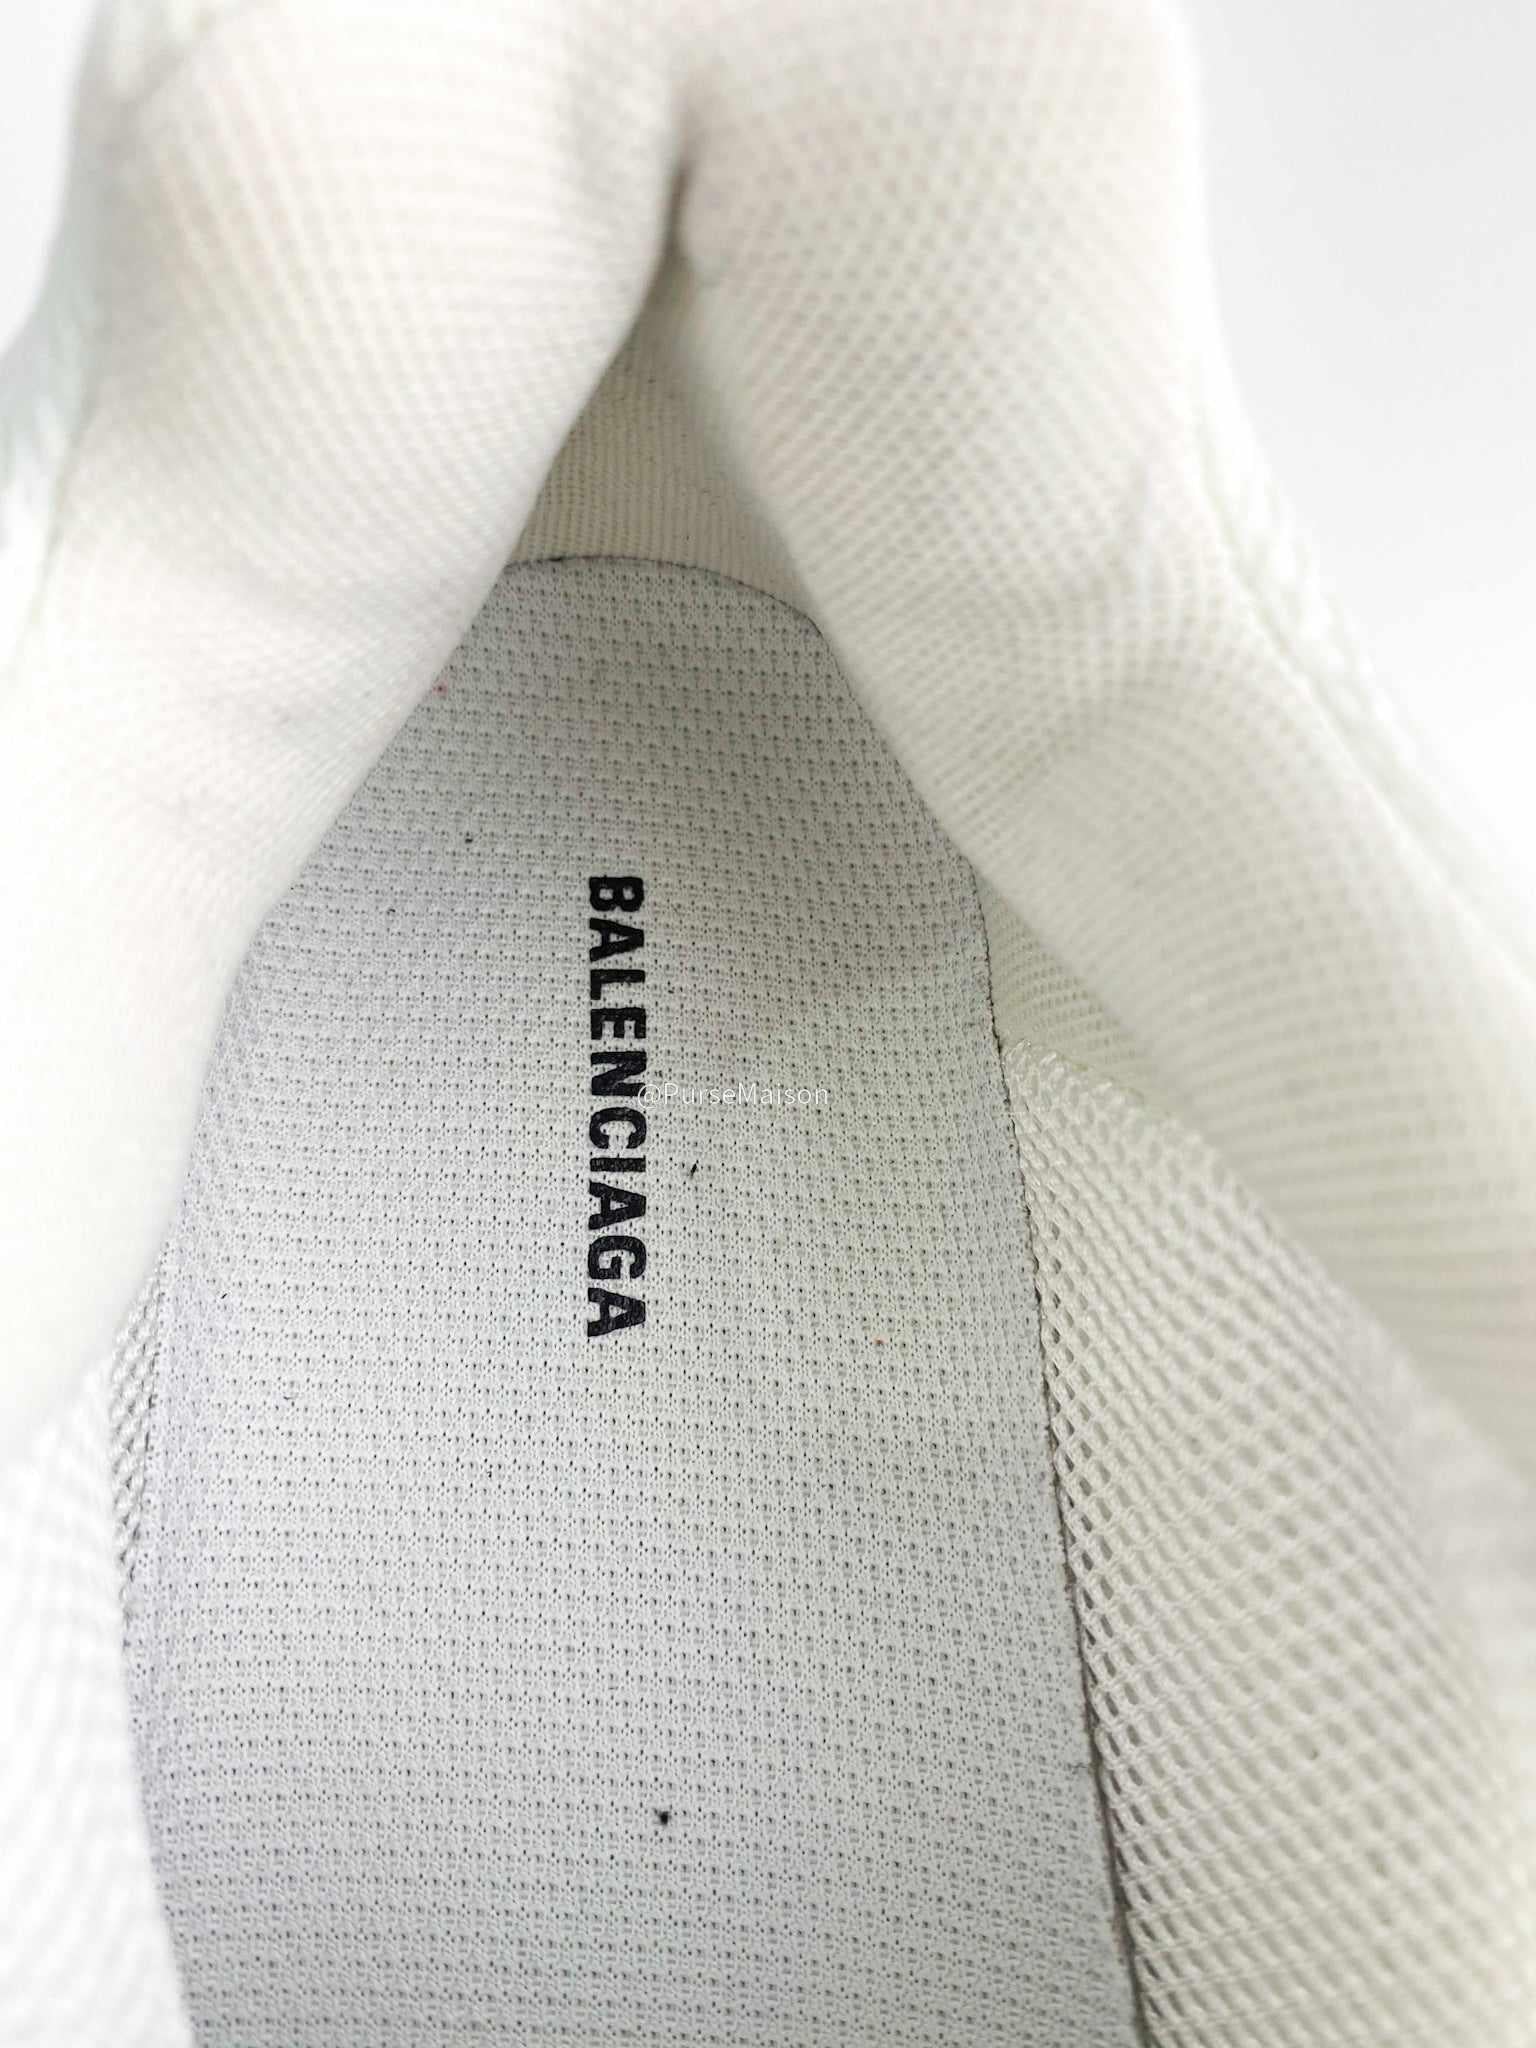 Balenciaga Women’s Triple S Sneaker in White Size 35 EUR